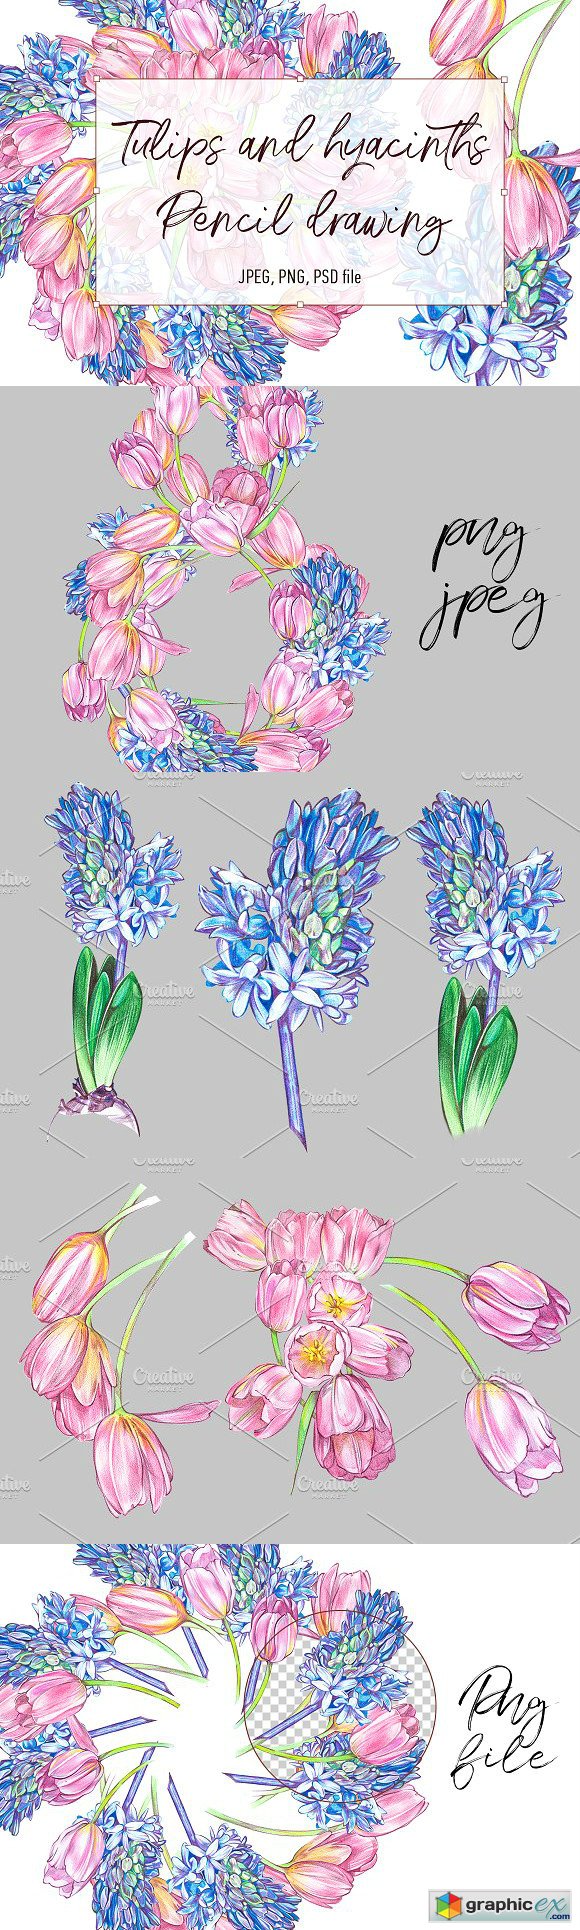 Tulips and hyacinths